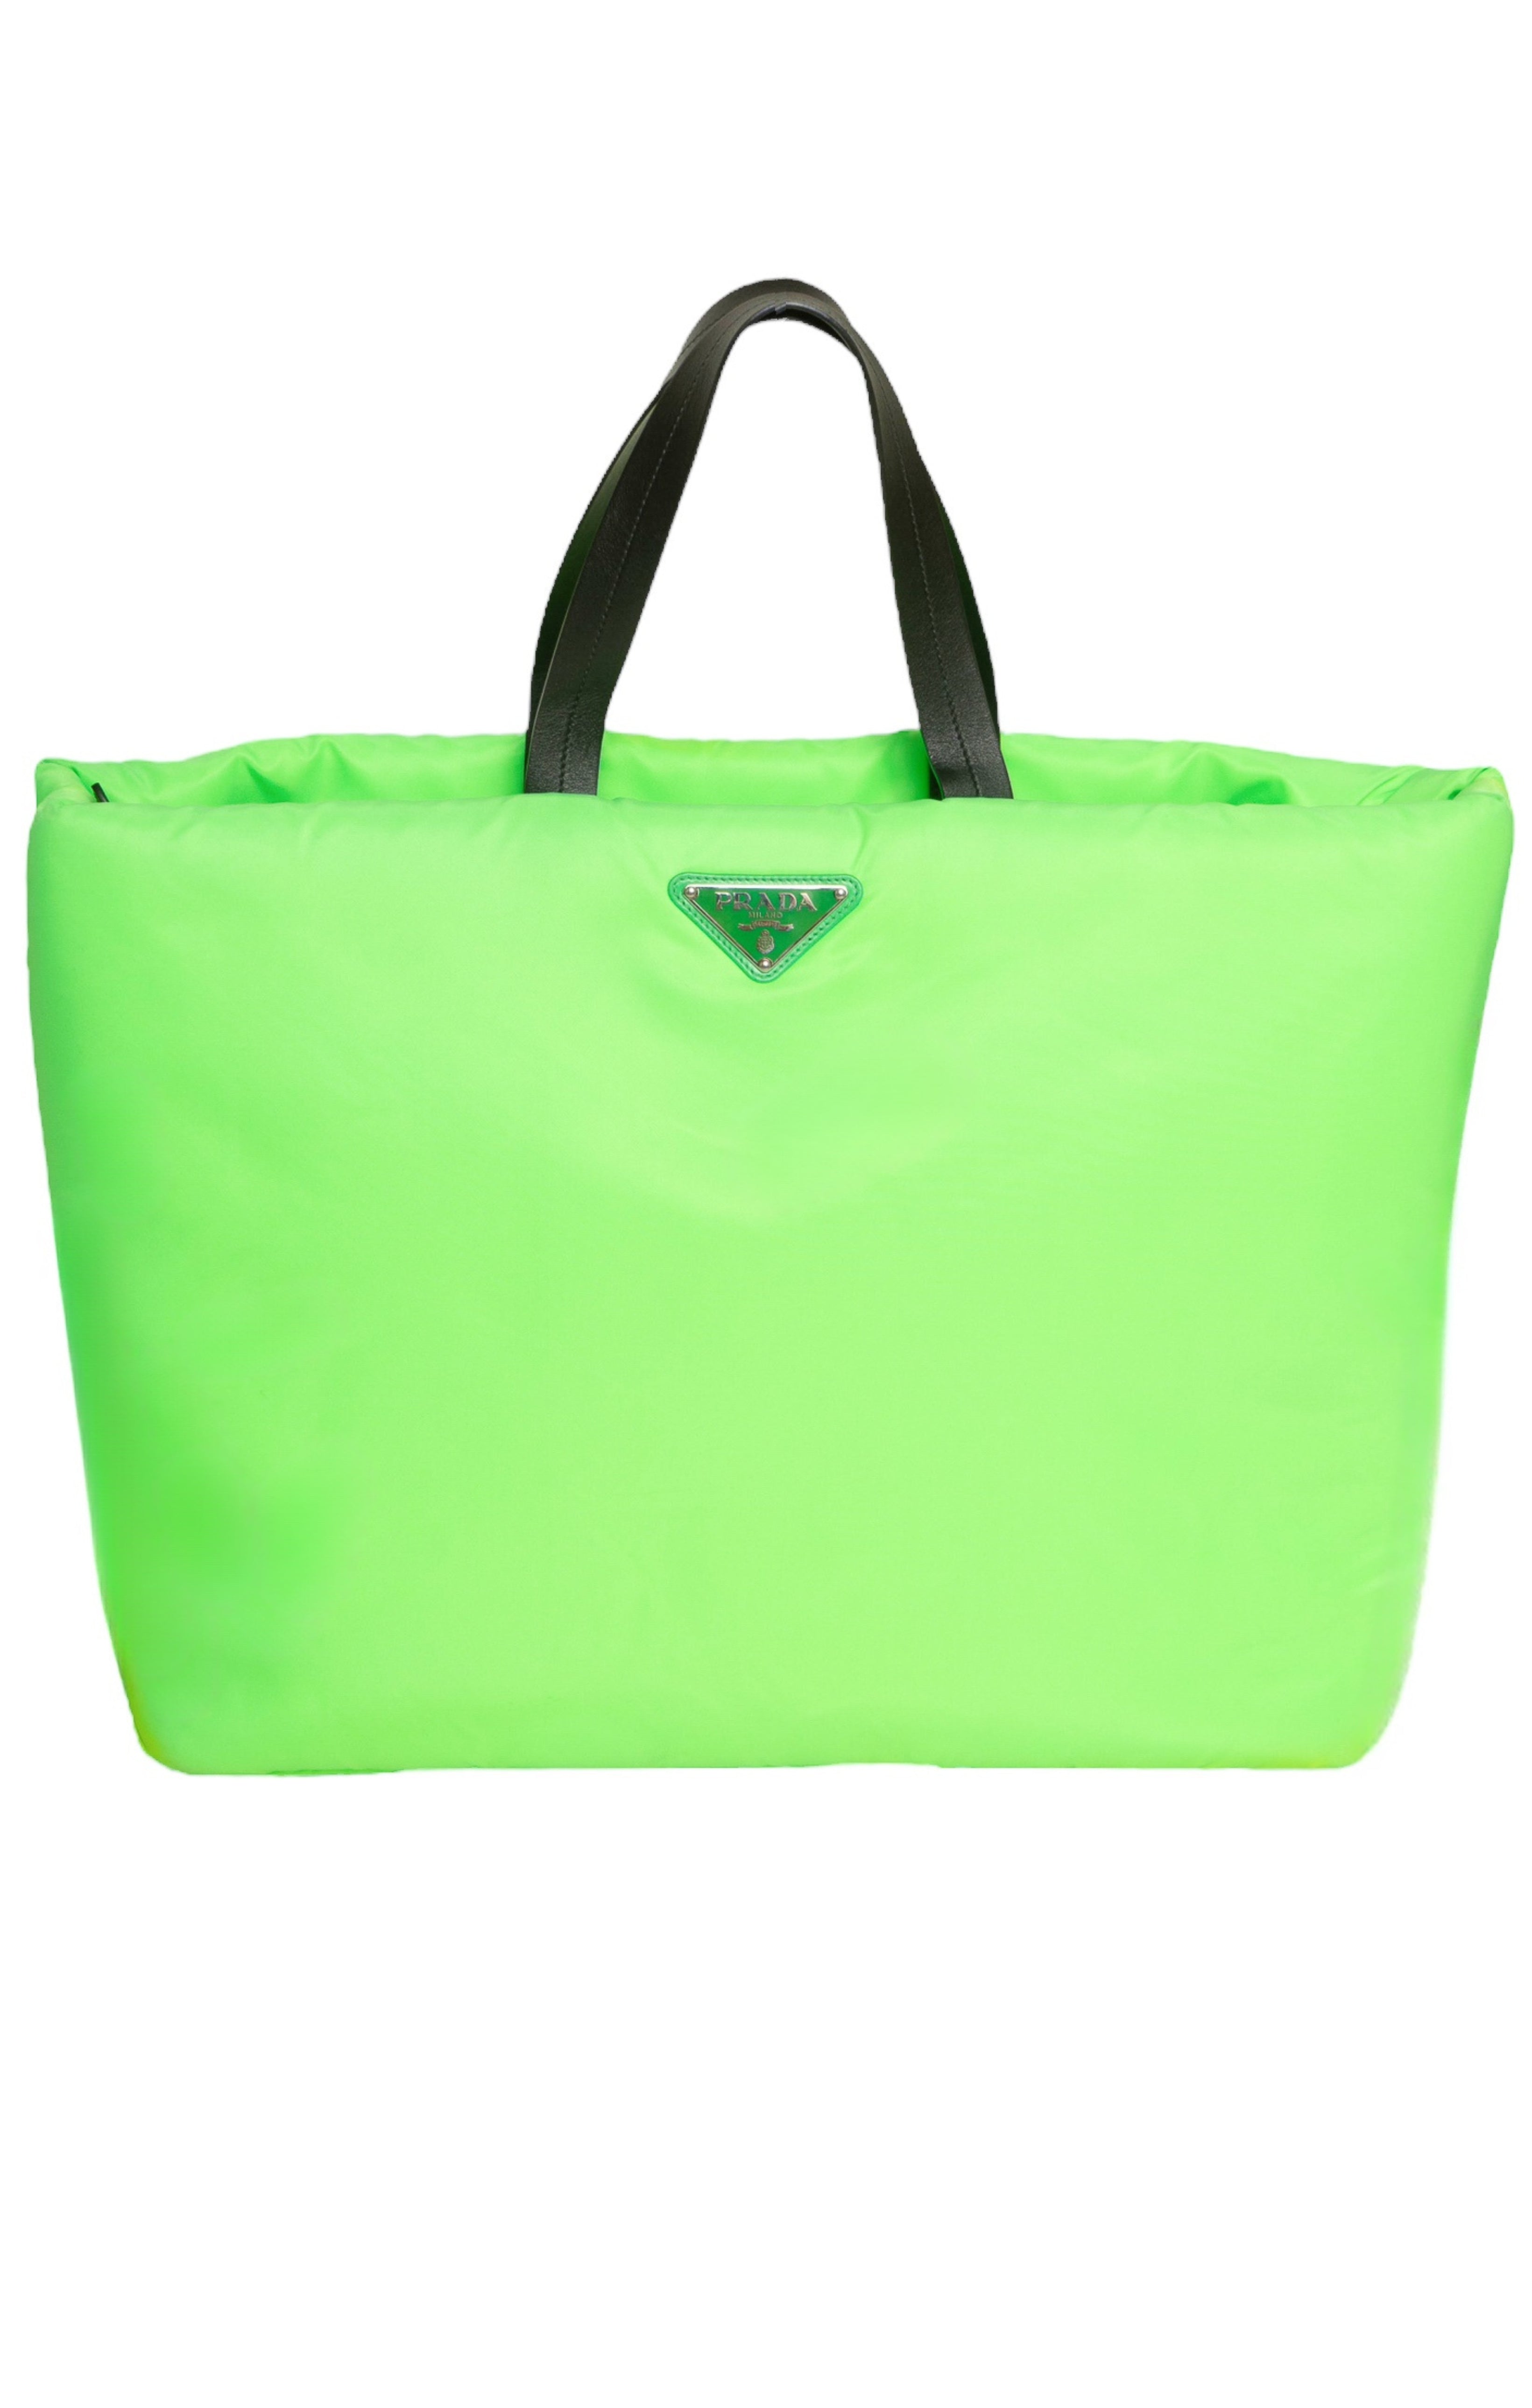 PRADA (RARE) Bag / Luggage Size: 17.25" x 9.75" x 11"; 6.5" drop handle